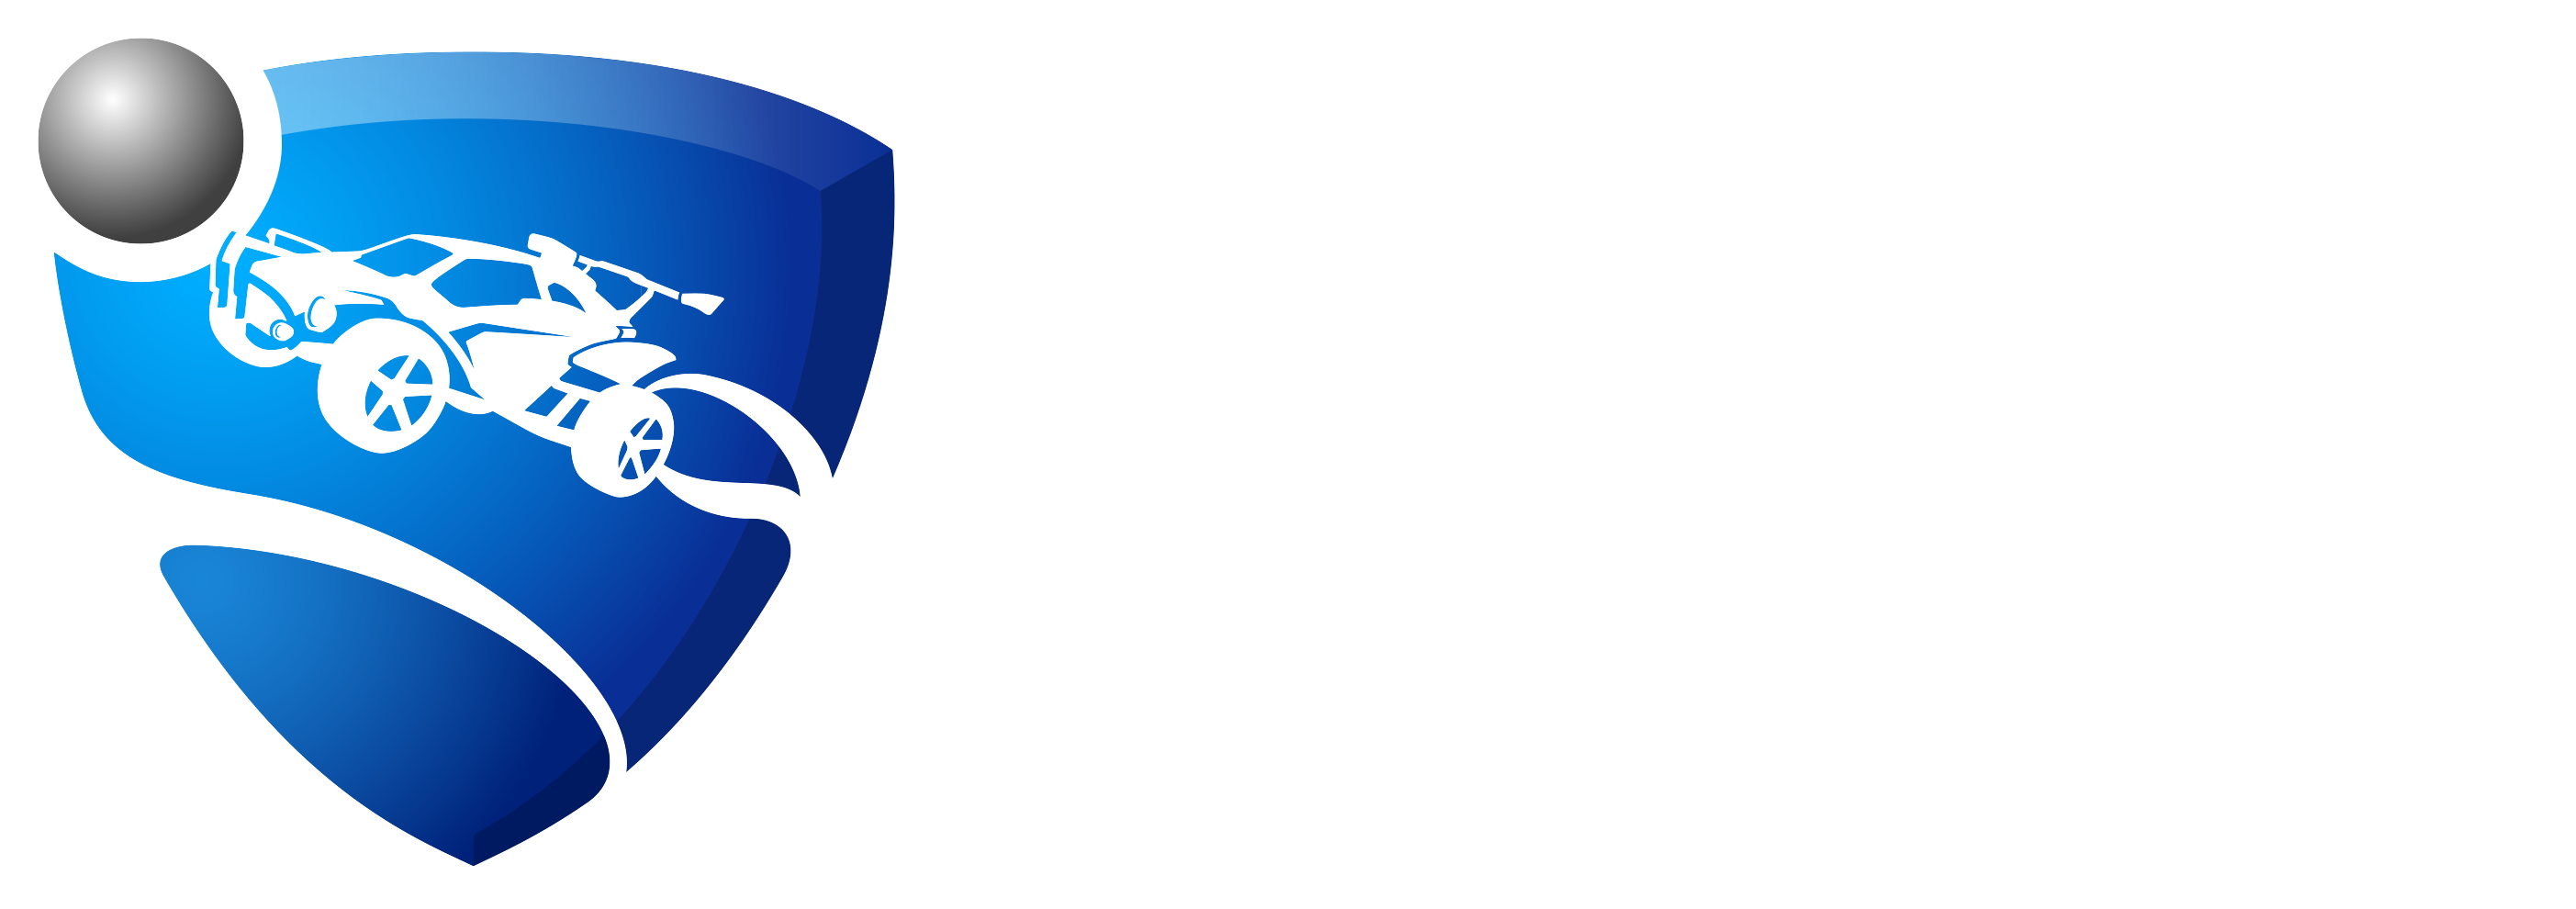 league mac download